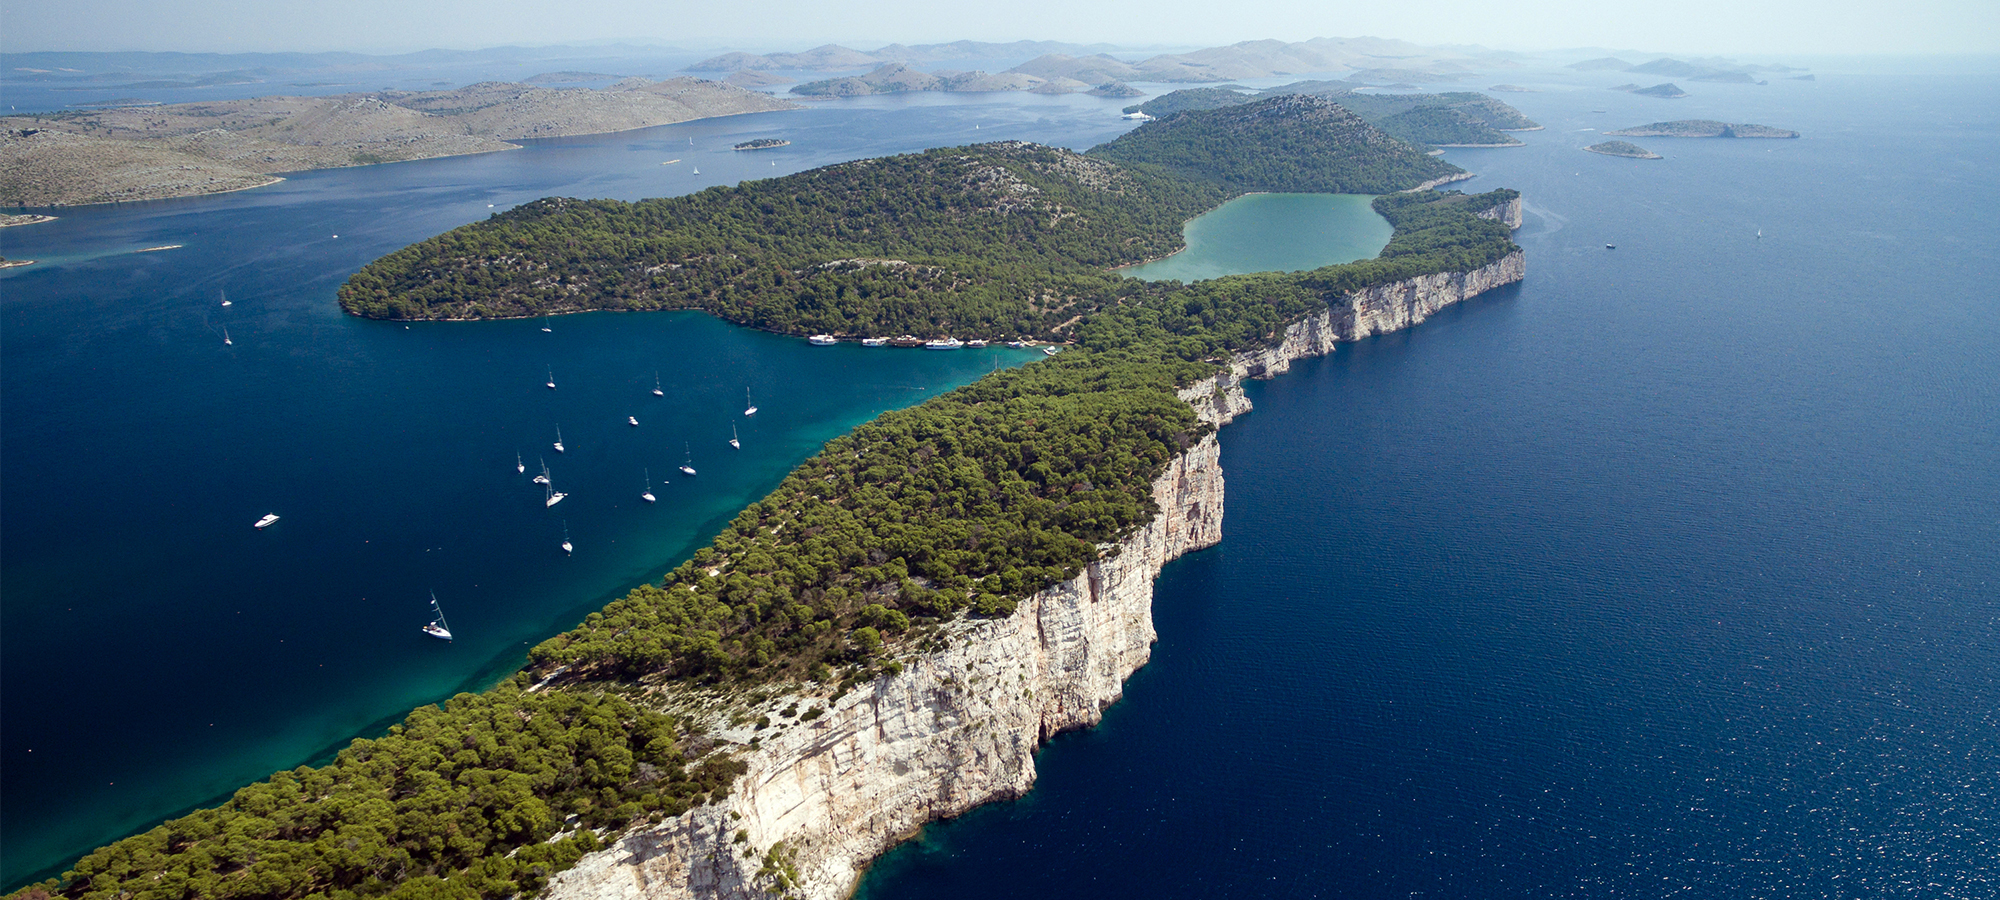 Plan Your Perfect Sailing Route: North Dalmatia